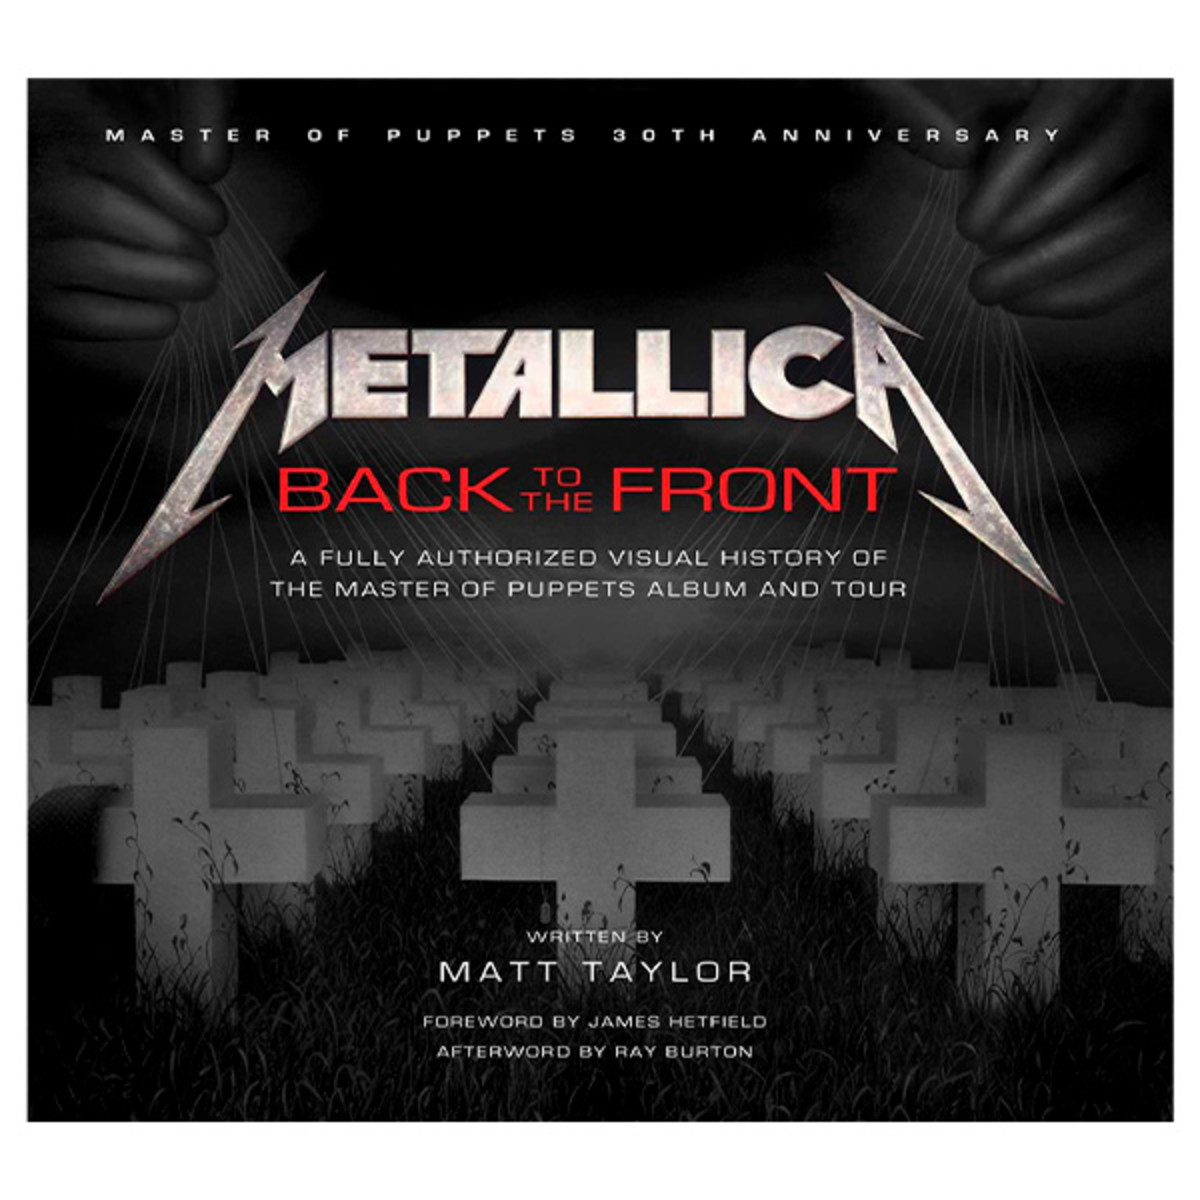 MetallicaBacktofront